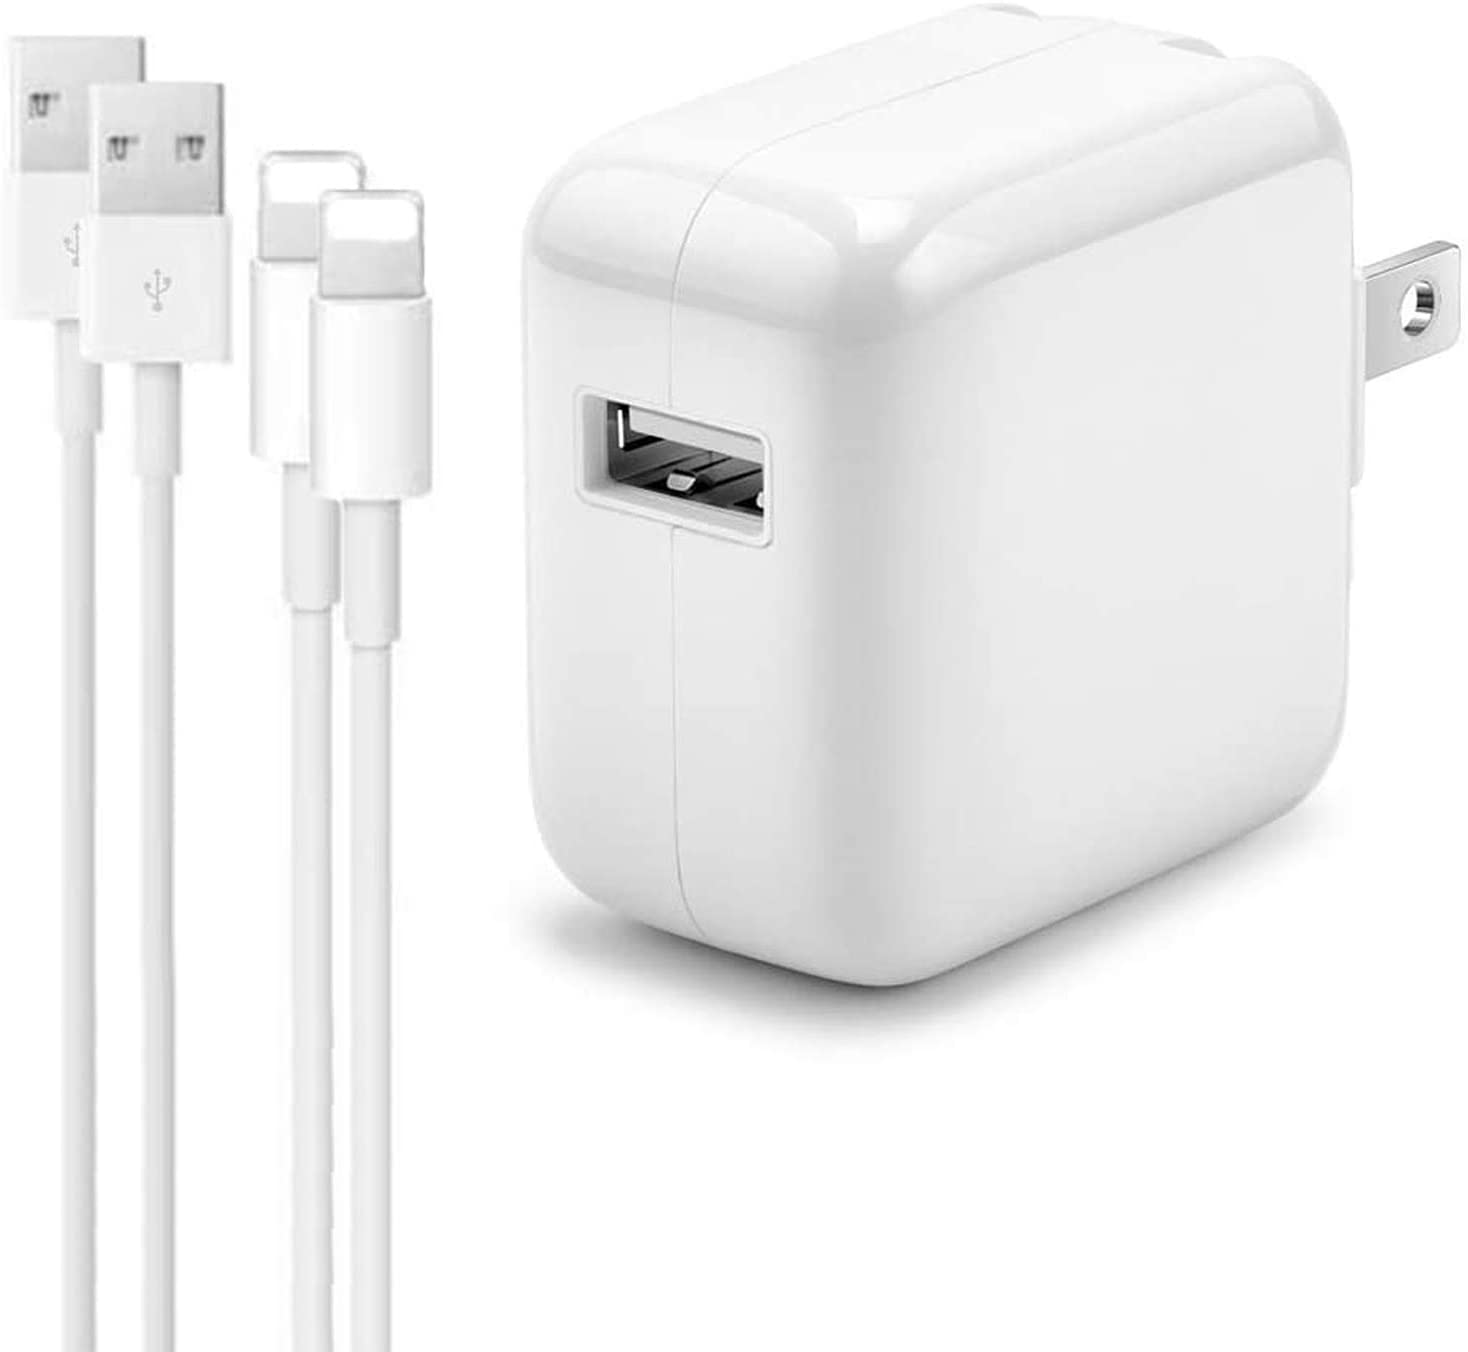 Apple 12W USB Charger for iPad | iPlace Kenya